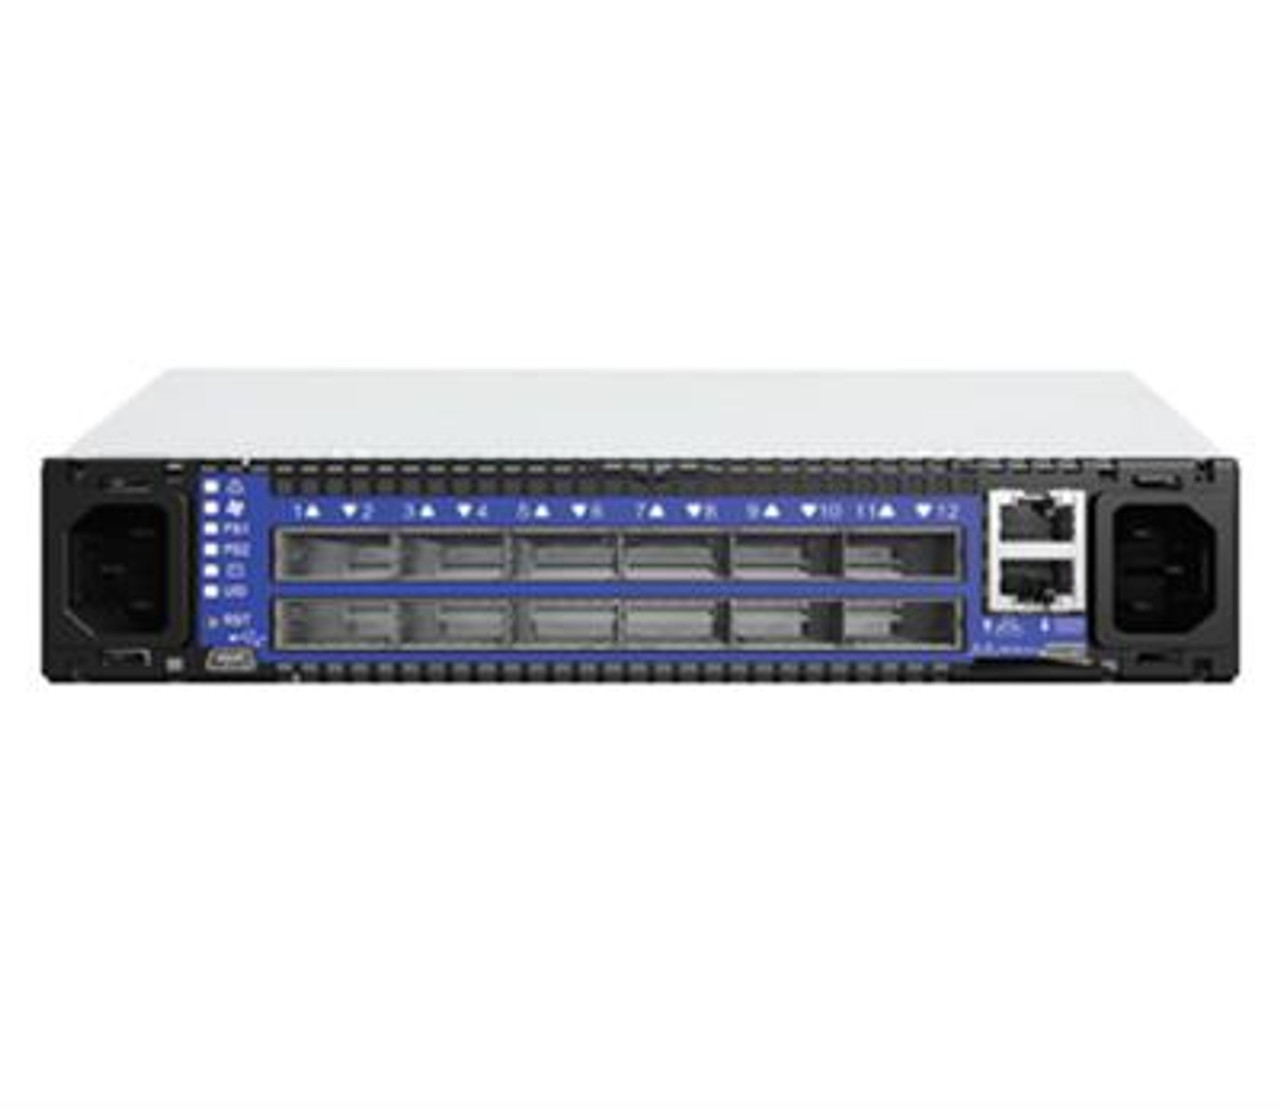 MSX6012F-1BRS_WT Mellanox SwitchX-2 Based 12-Ports QSFP+ FDR 56GB/S 1U InfiniBand Switch 1 Power Supply Short Depth Managed P1-2 LR4 Enabled P11-12 (Refurbished)